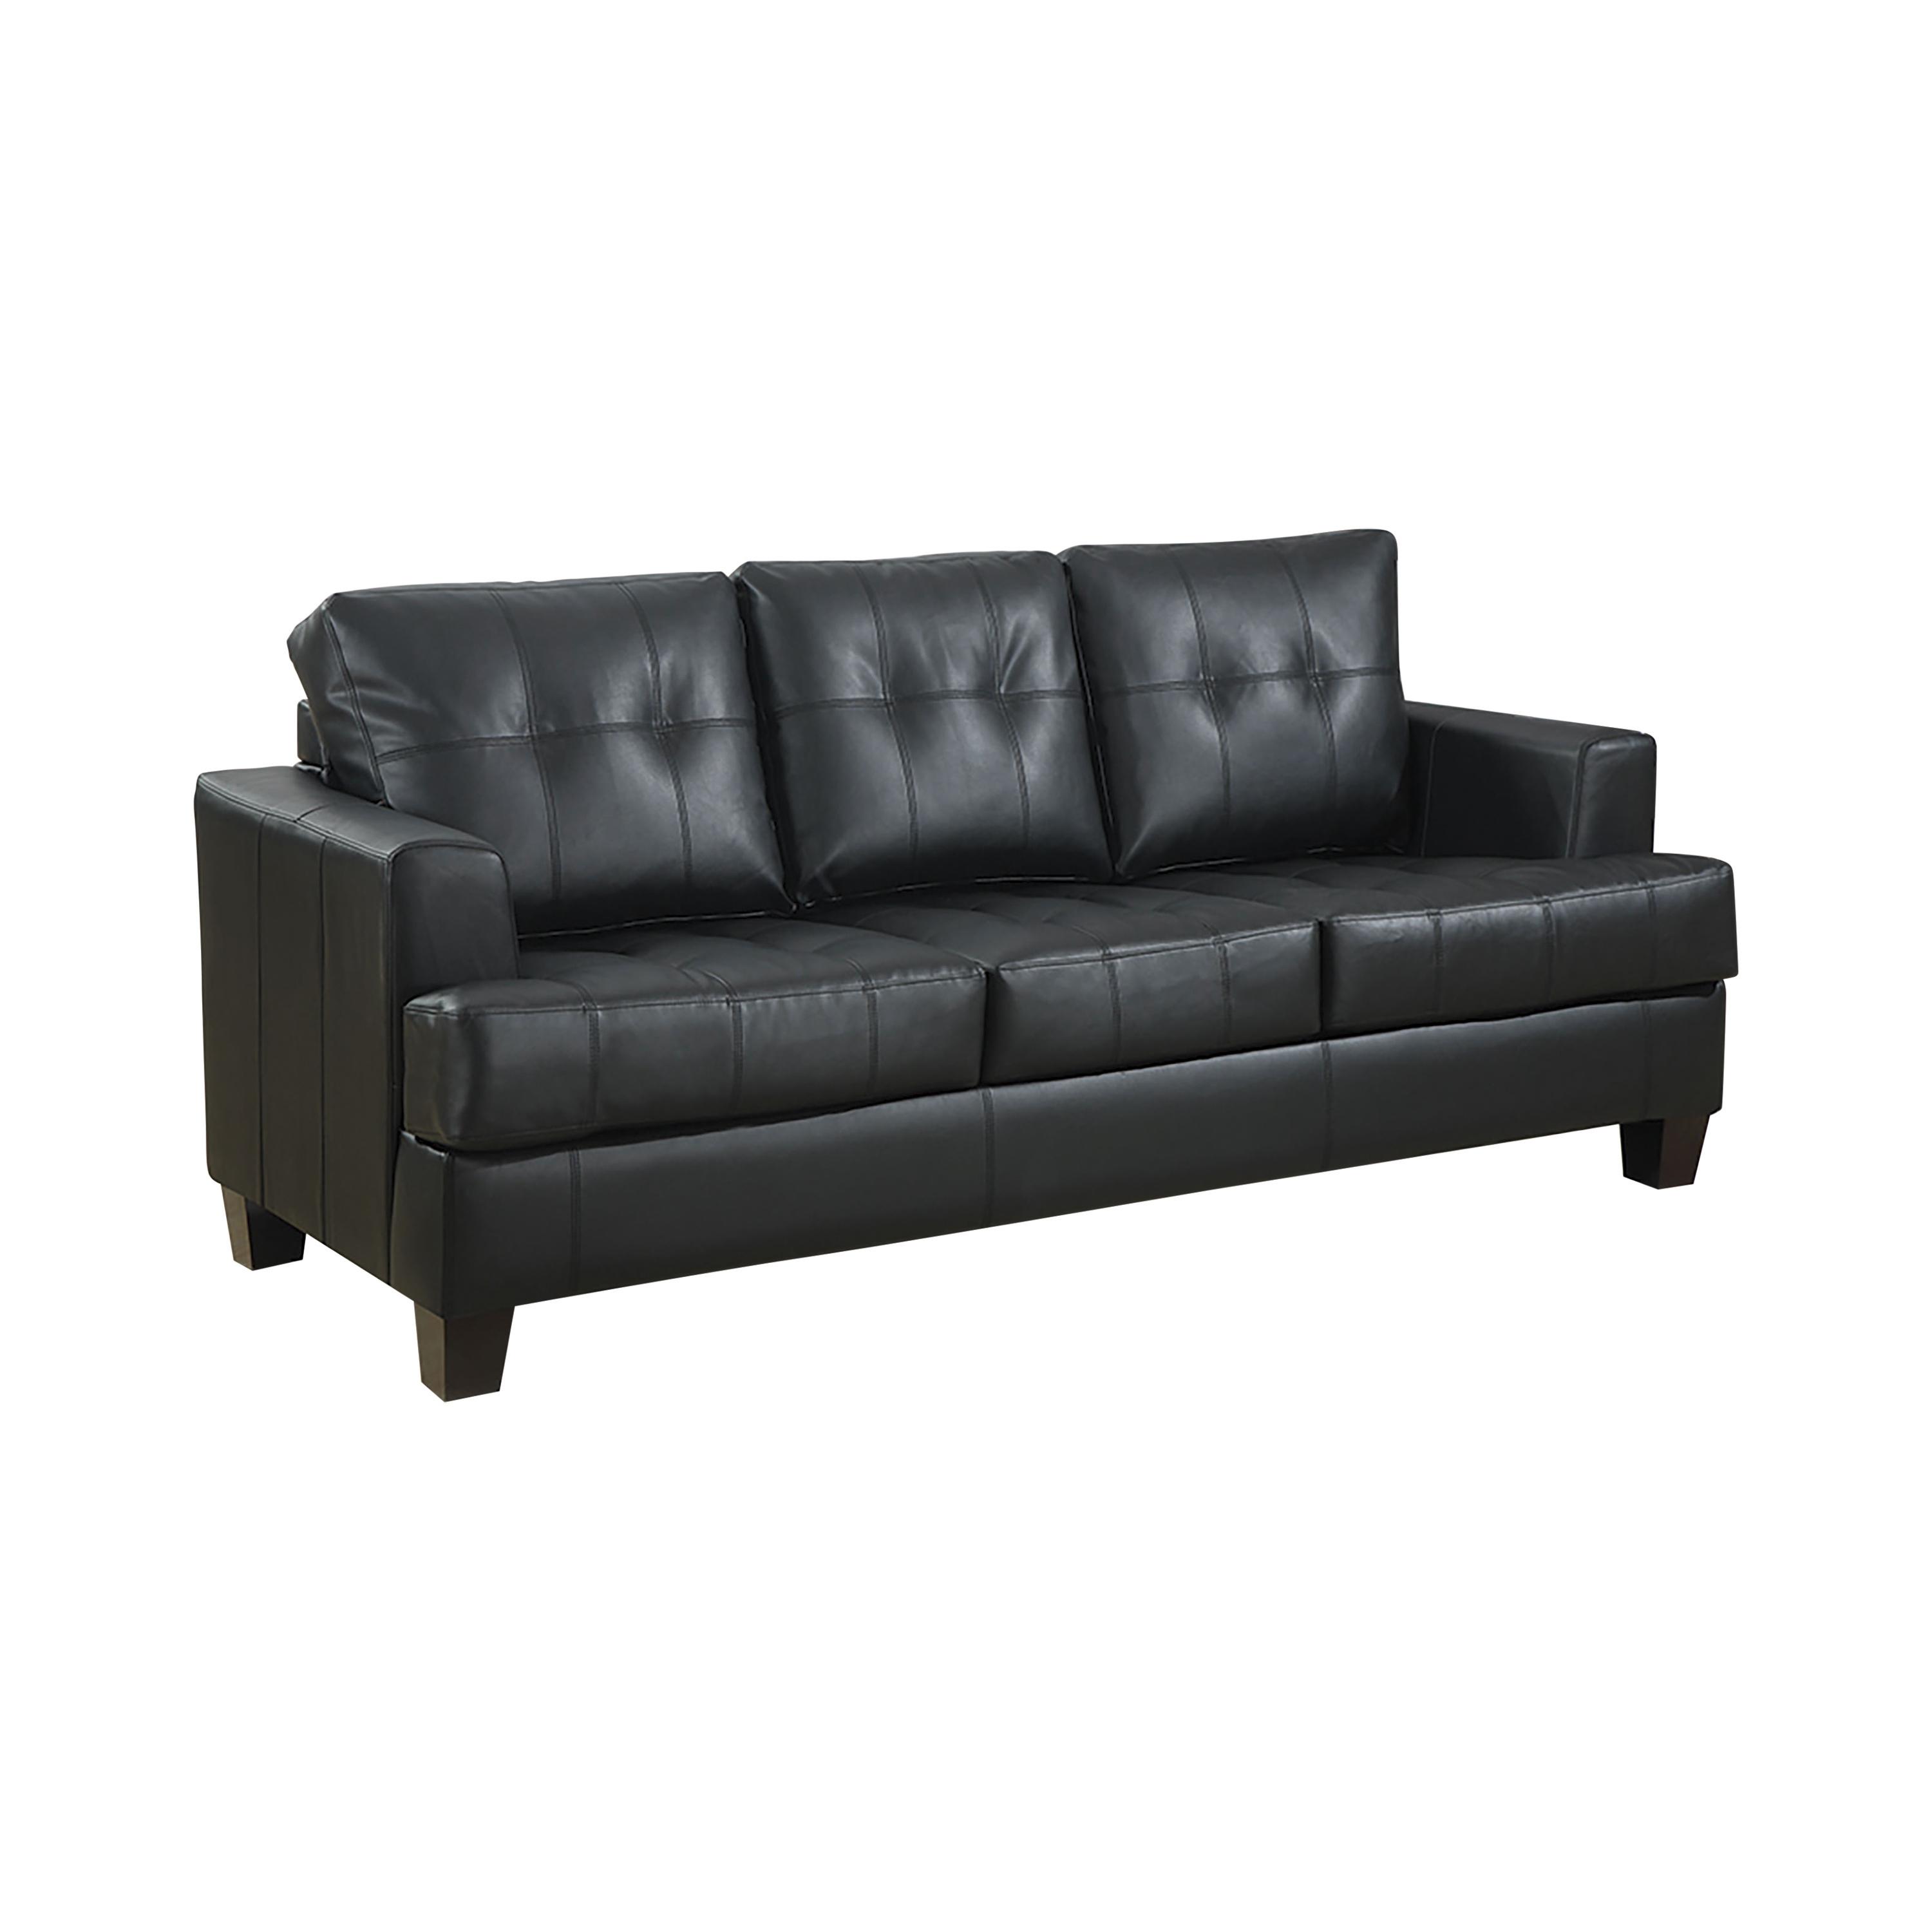 Transitional Sleeper Sofa 501680 Samuel 501680 in Black Leatherette